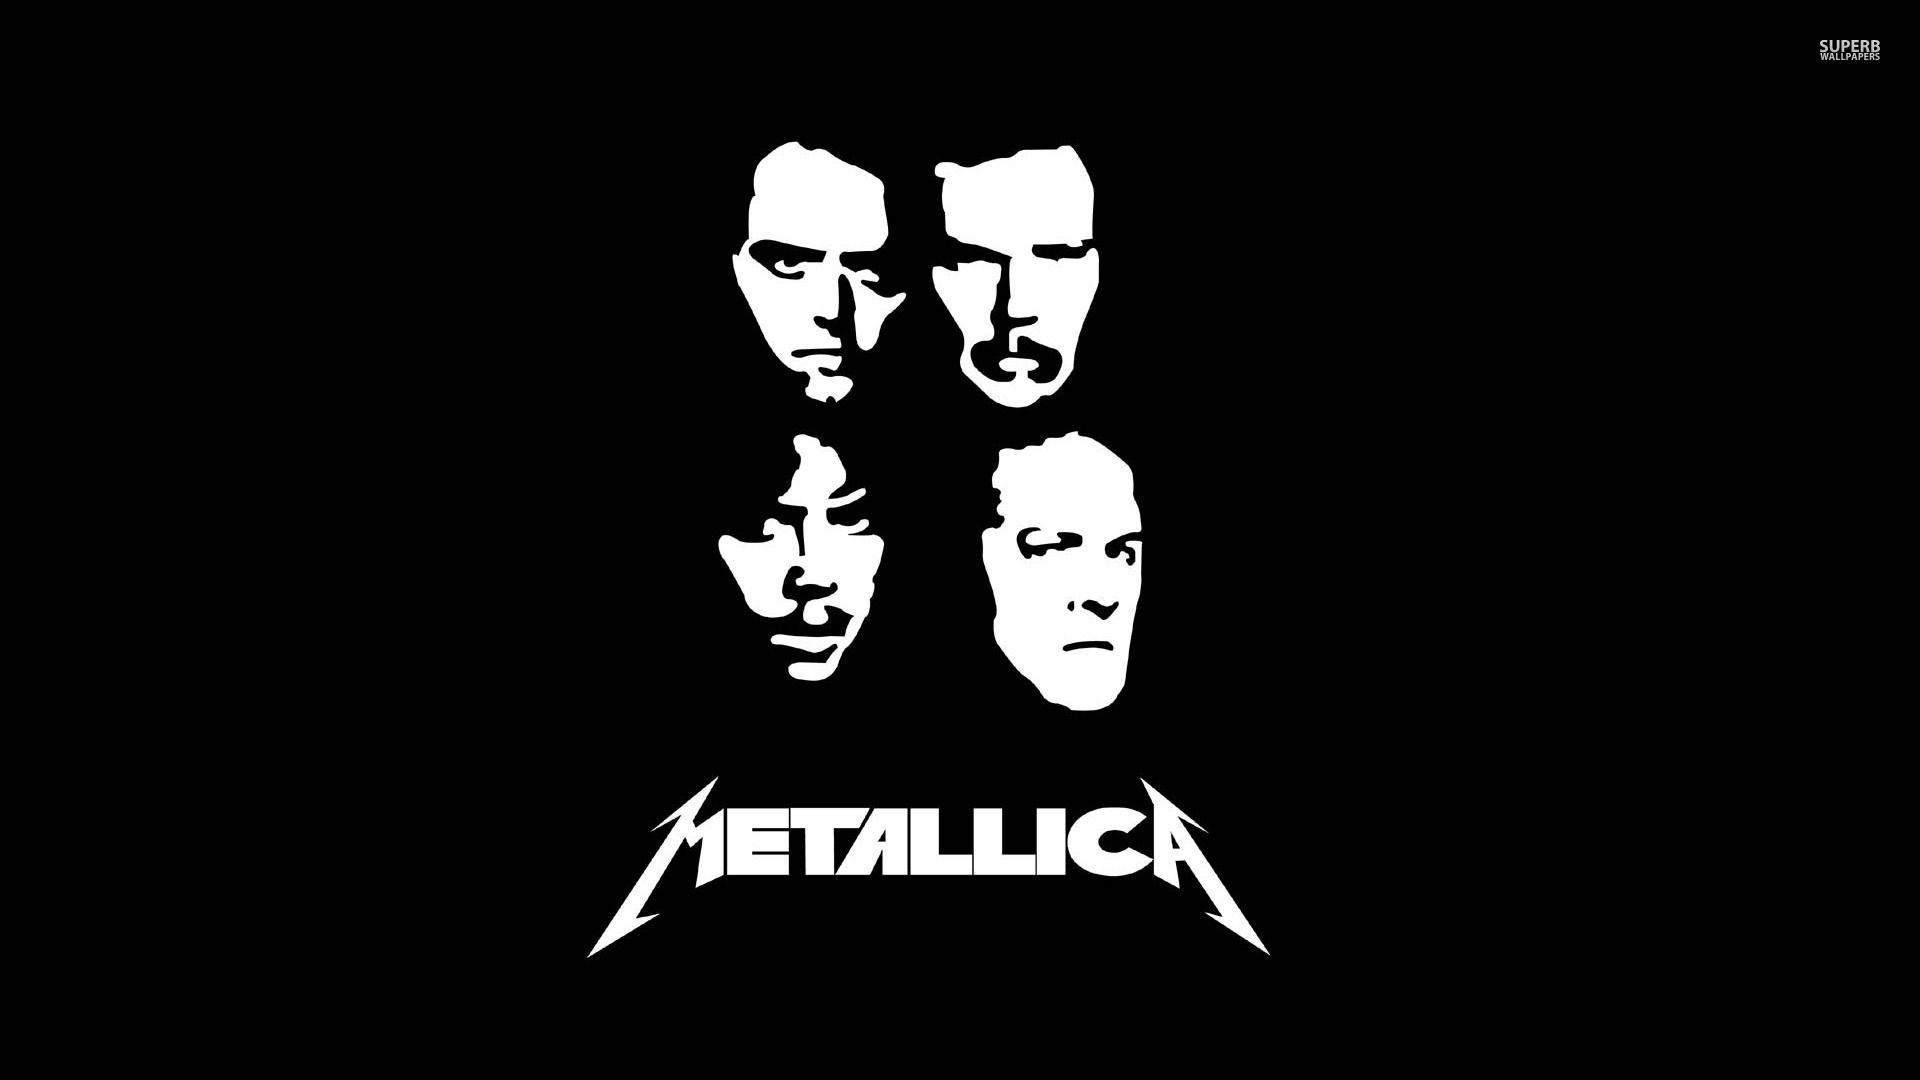 Metallica wallpaper - Music wallpapers - #28327